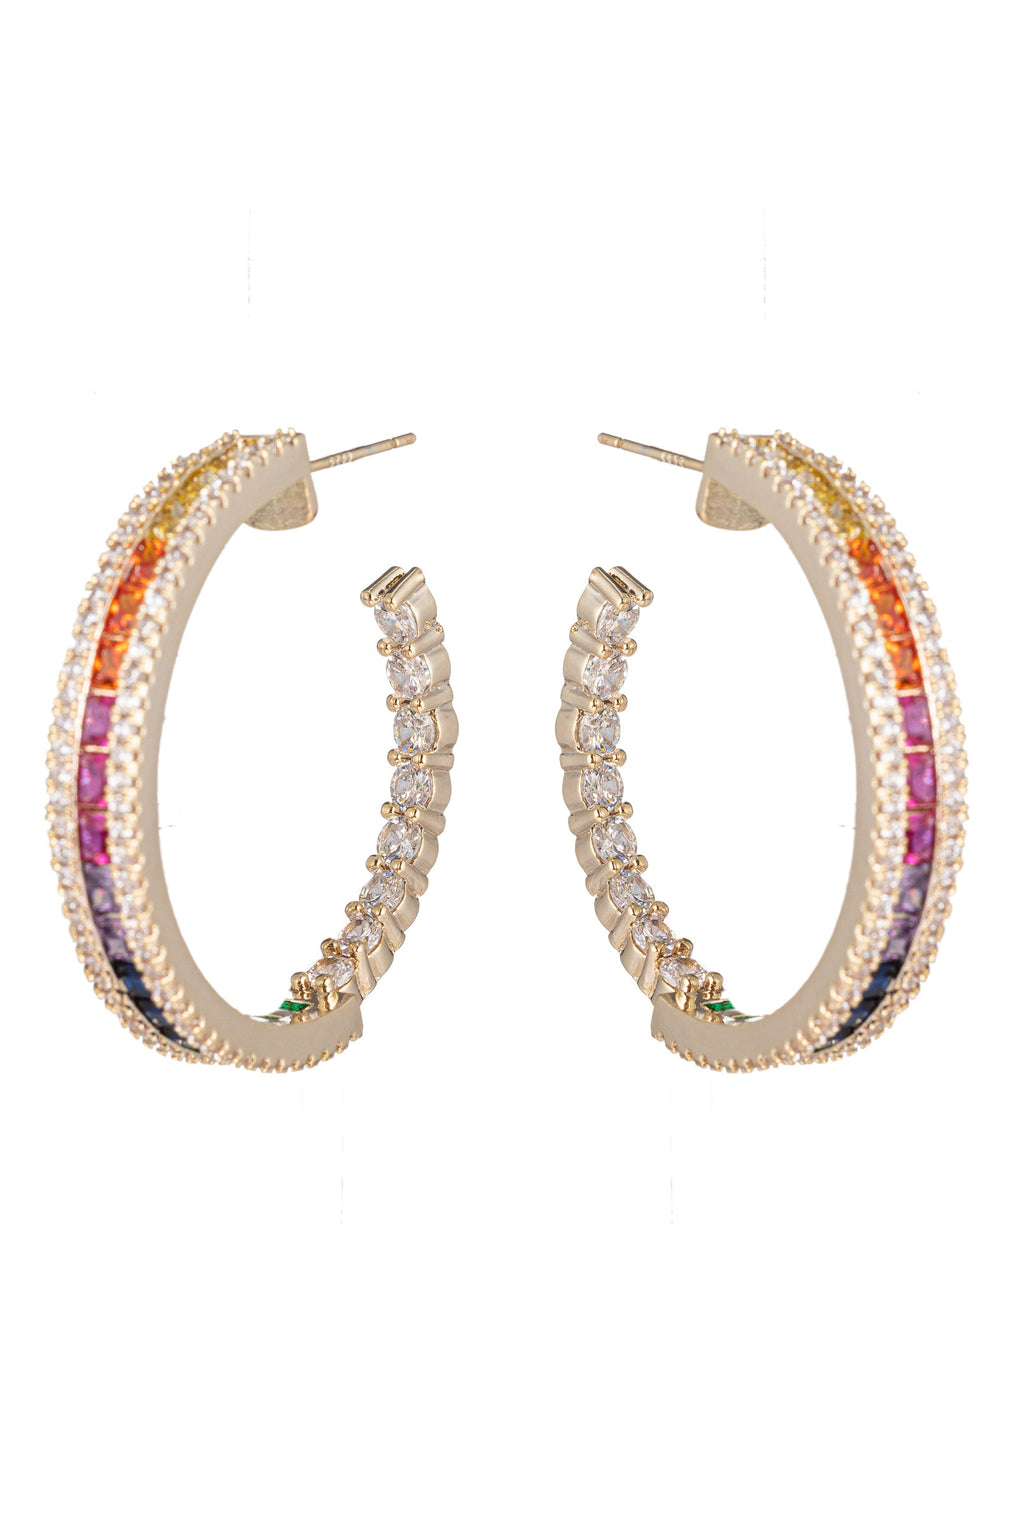 Dazzling Sophia: A Kaleidoscope of Colors in Cubic Zirconia Hoop Earrings